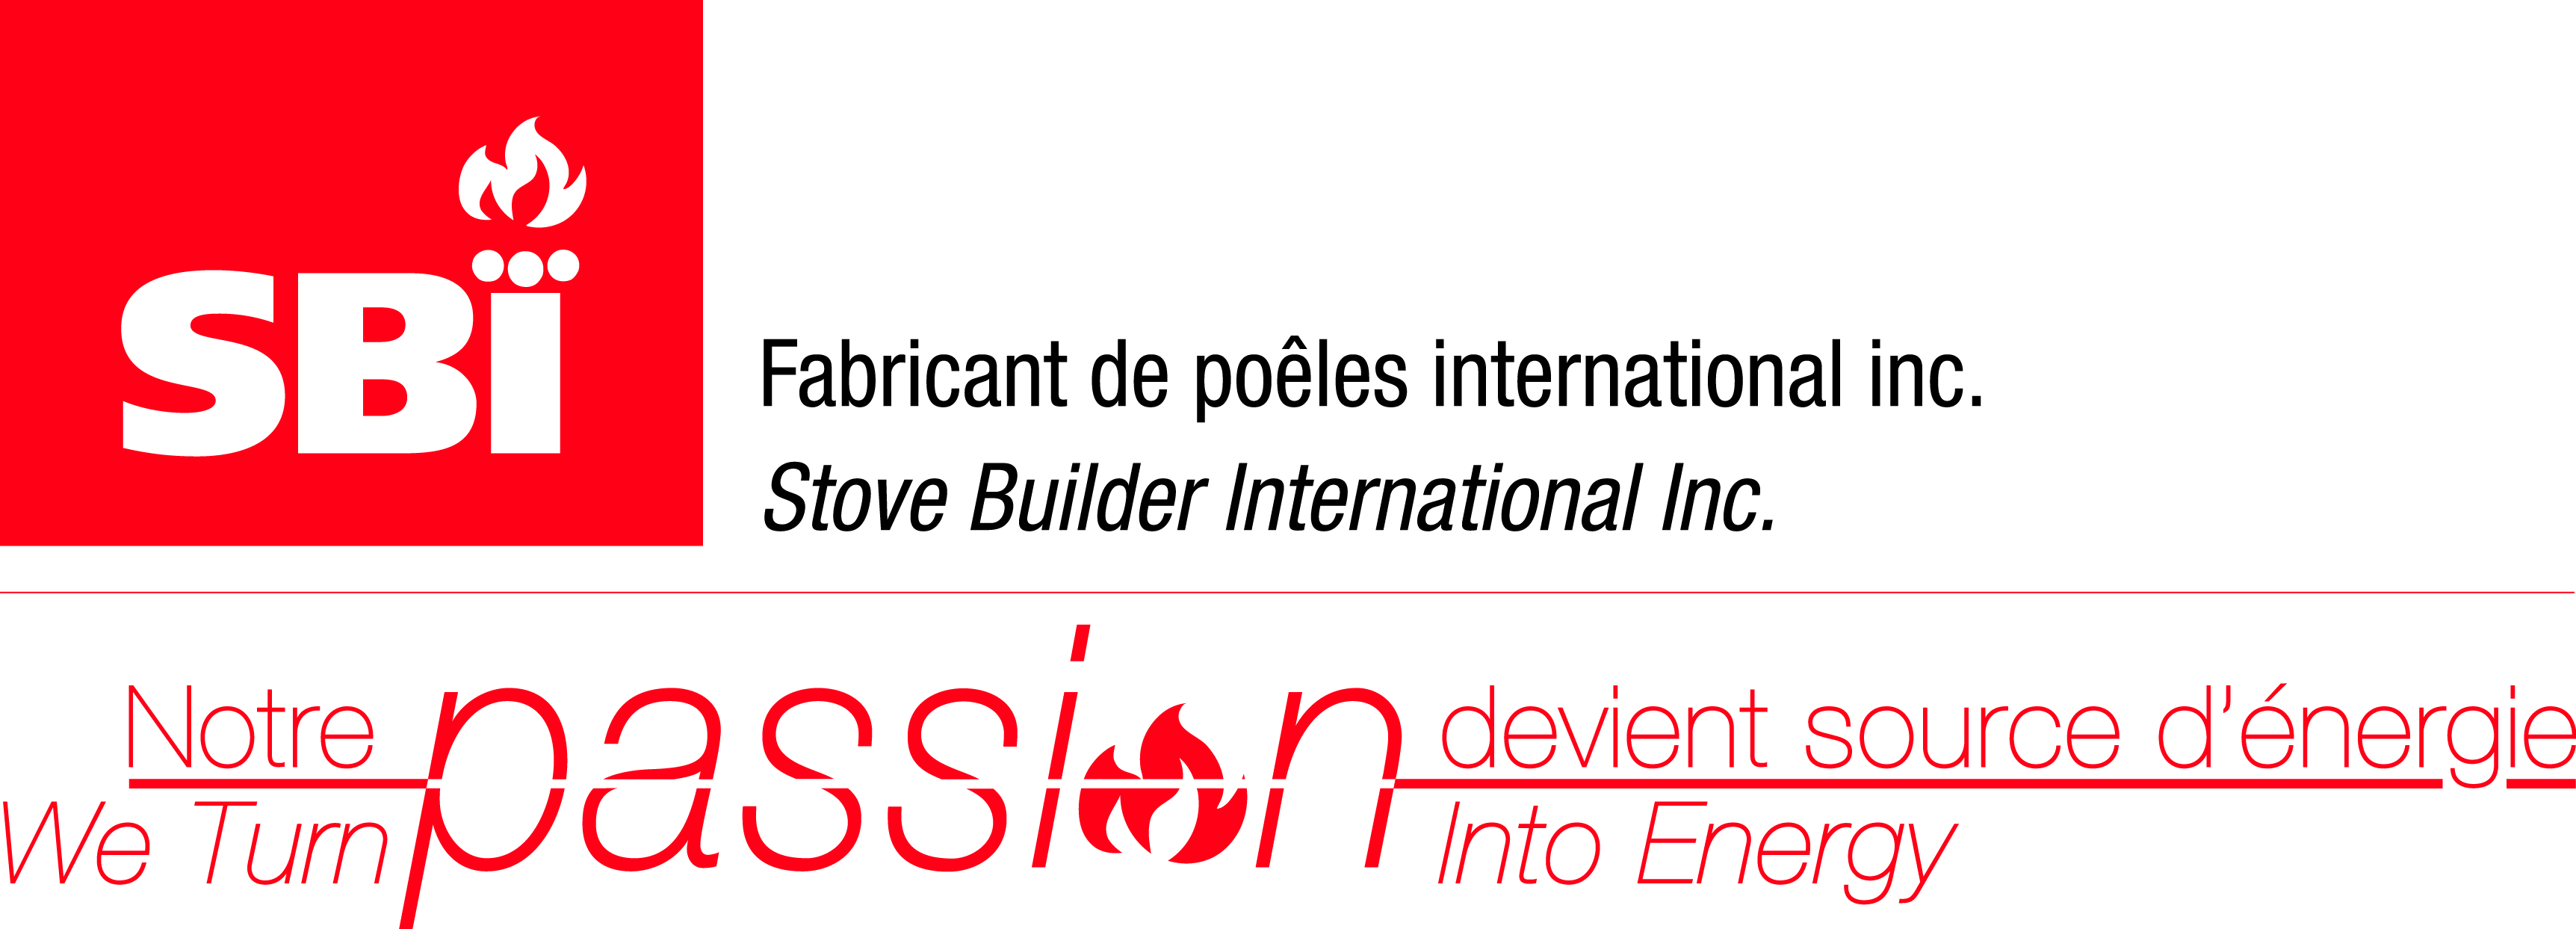 Stove Builder International Inc